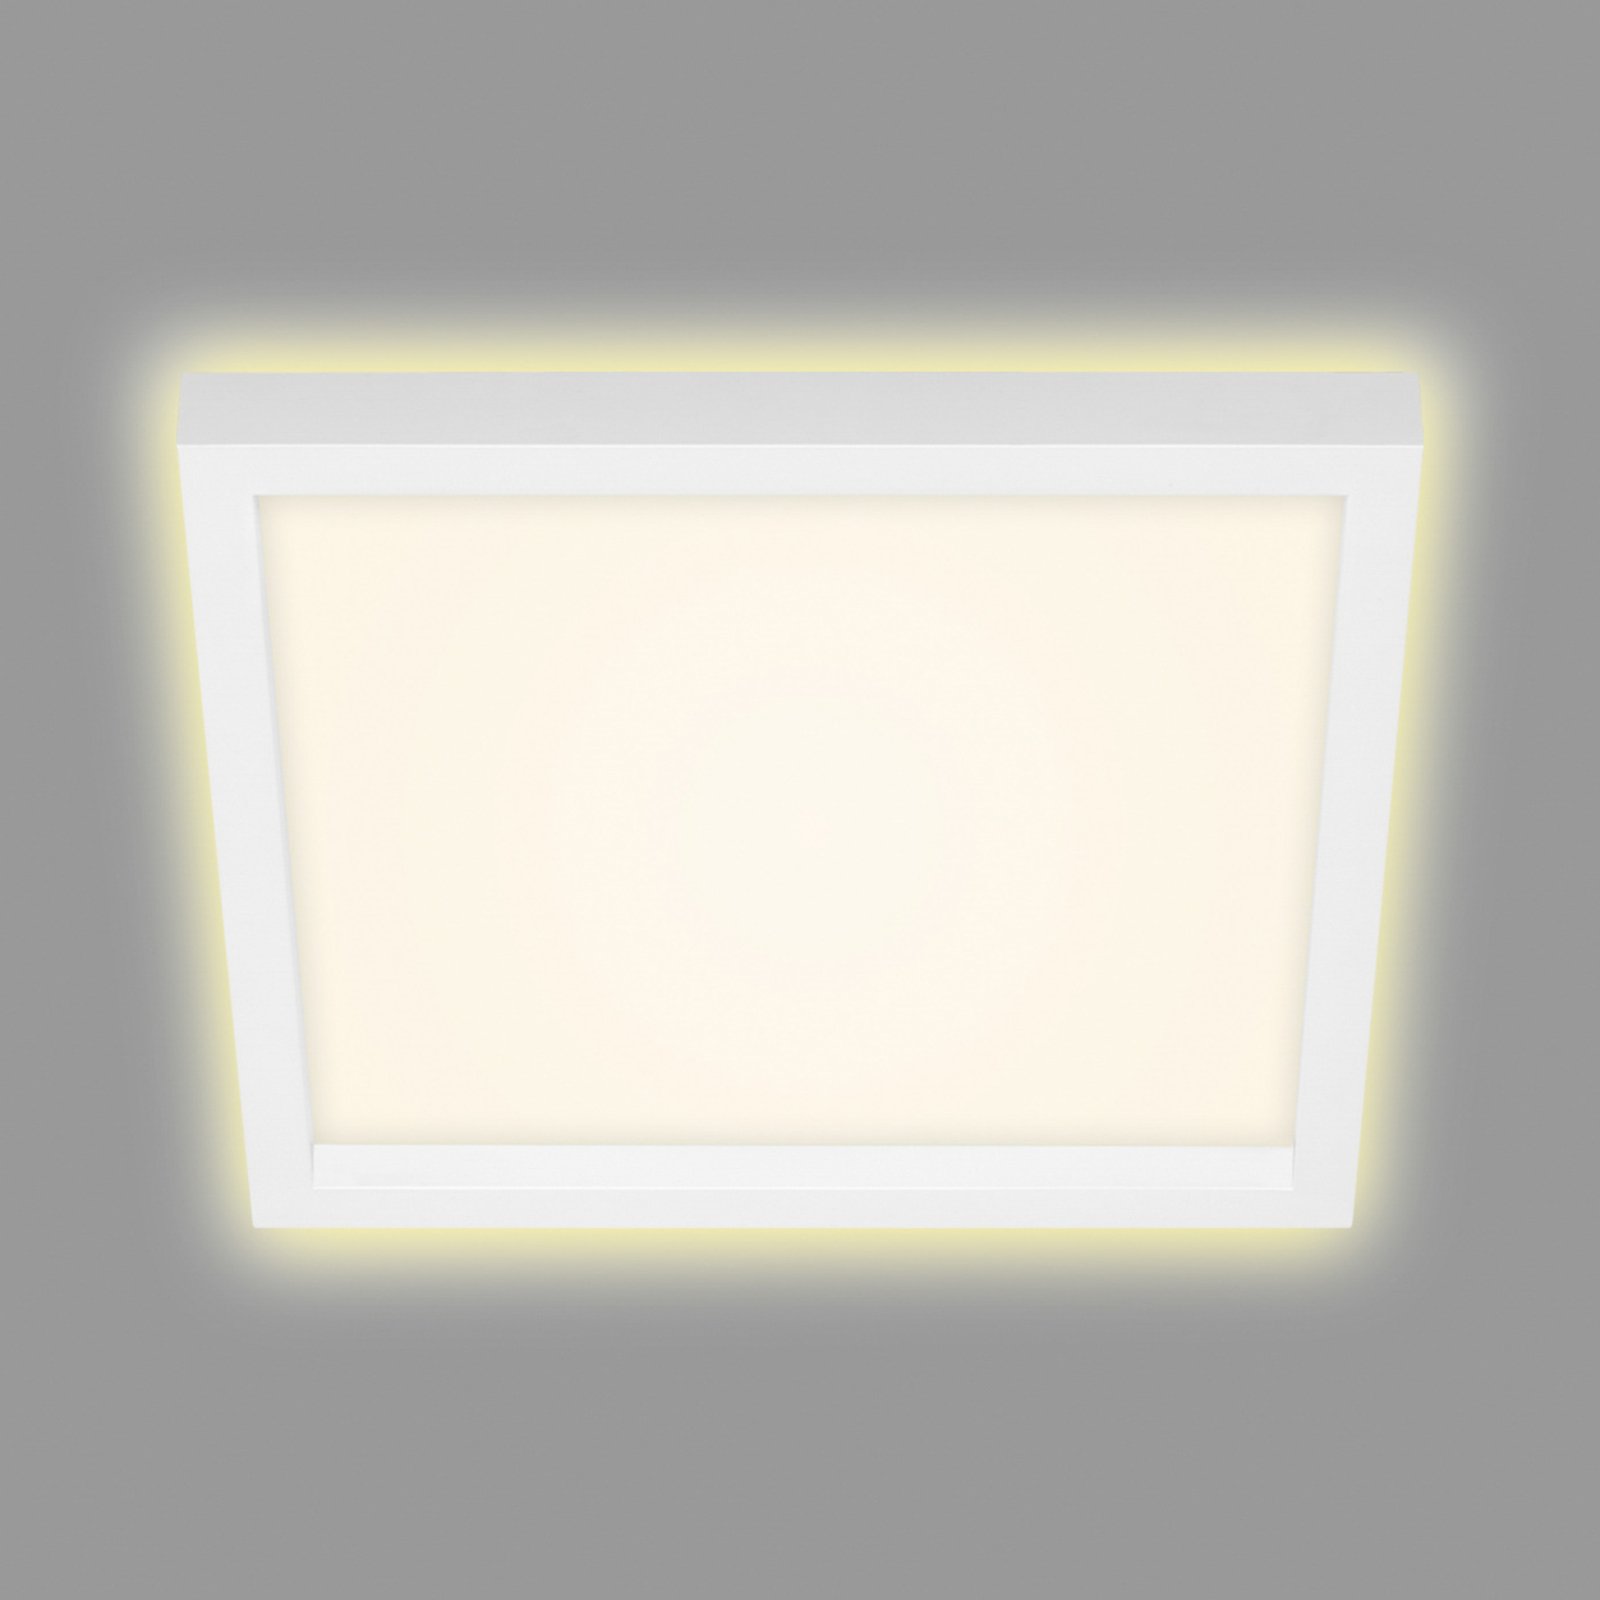 LED plafondlamp 7362, 29 x 29 cm, wit